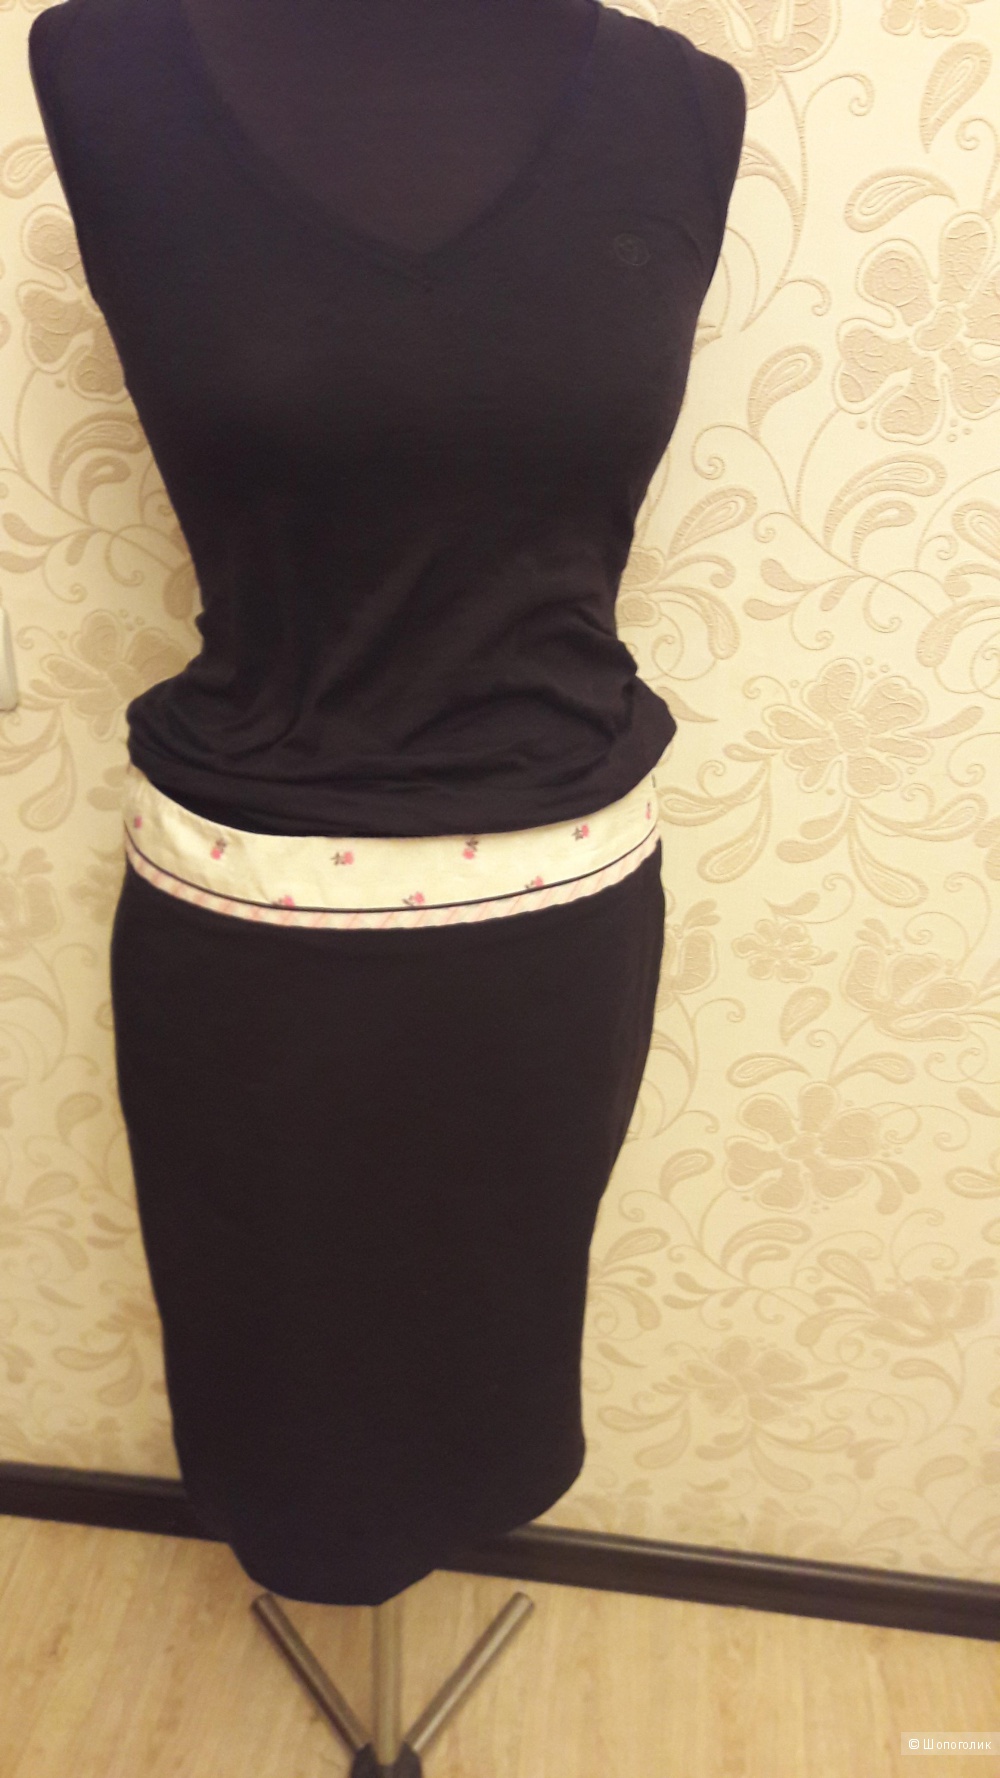 Tara Jarmon:  хлопковая юбка со стреч , 42